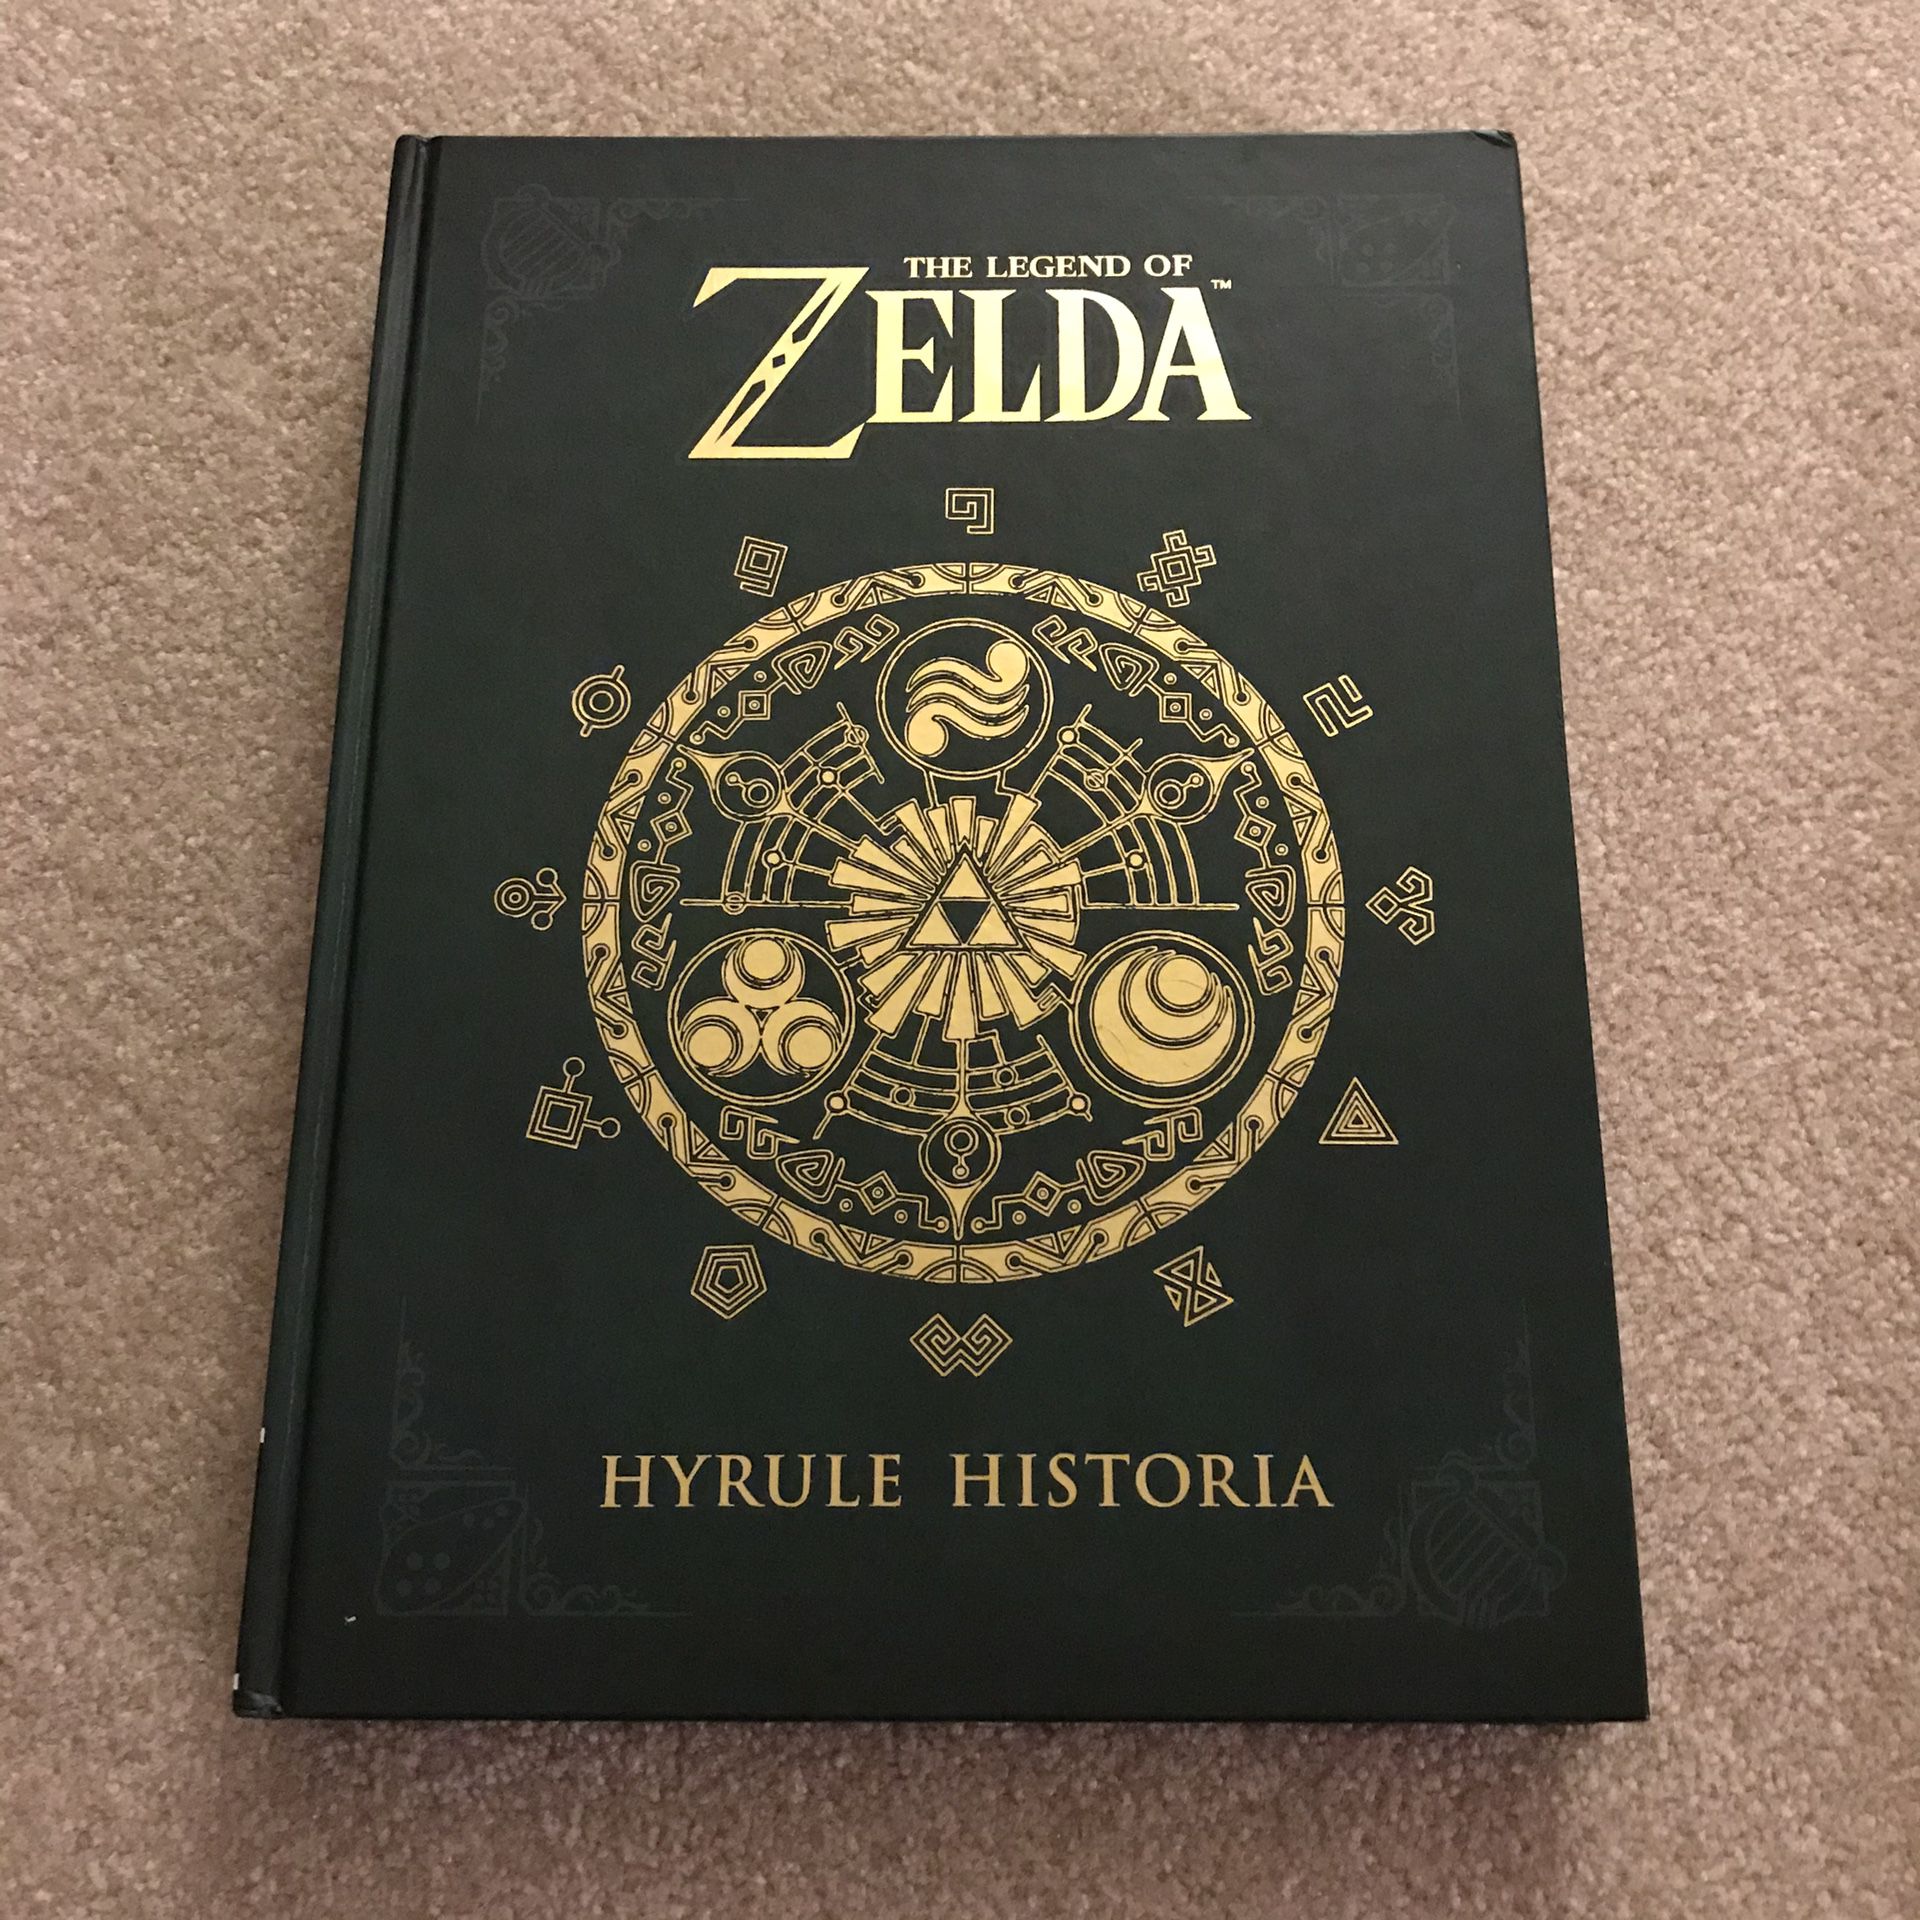 Legend of zelda hyrule historia book video game green text